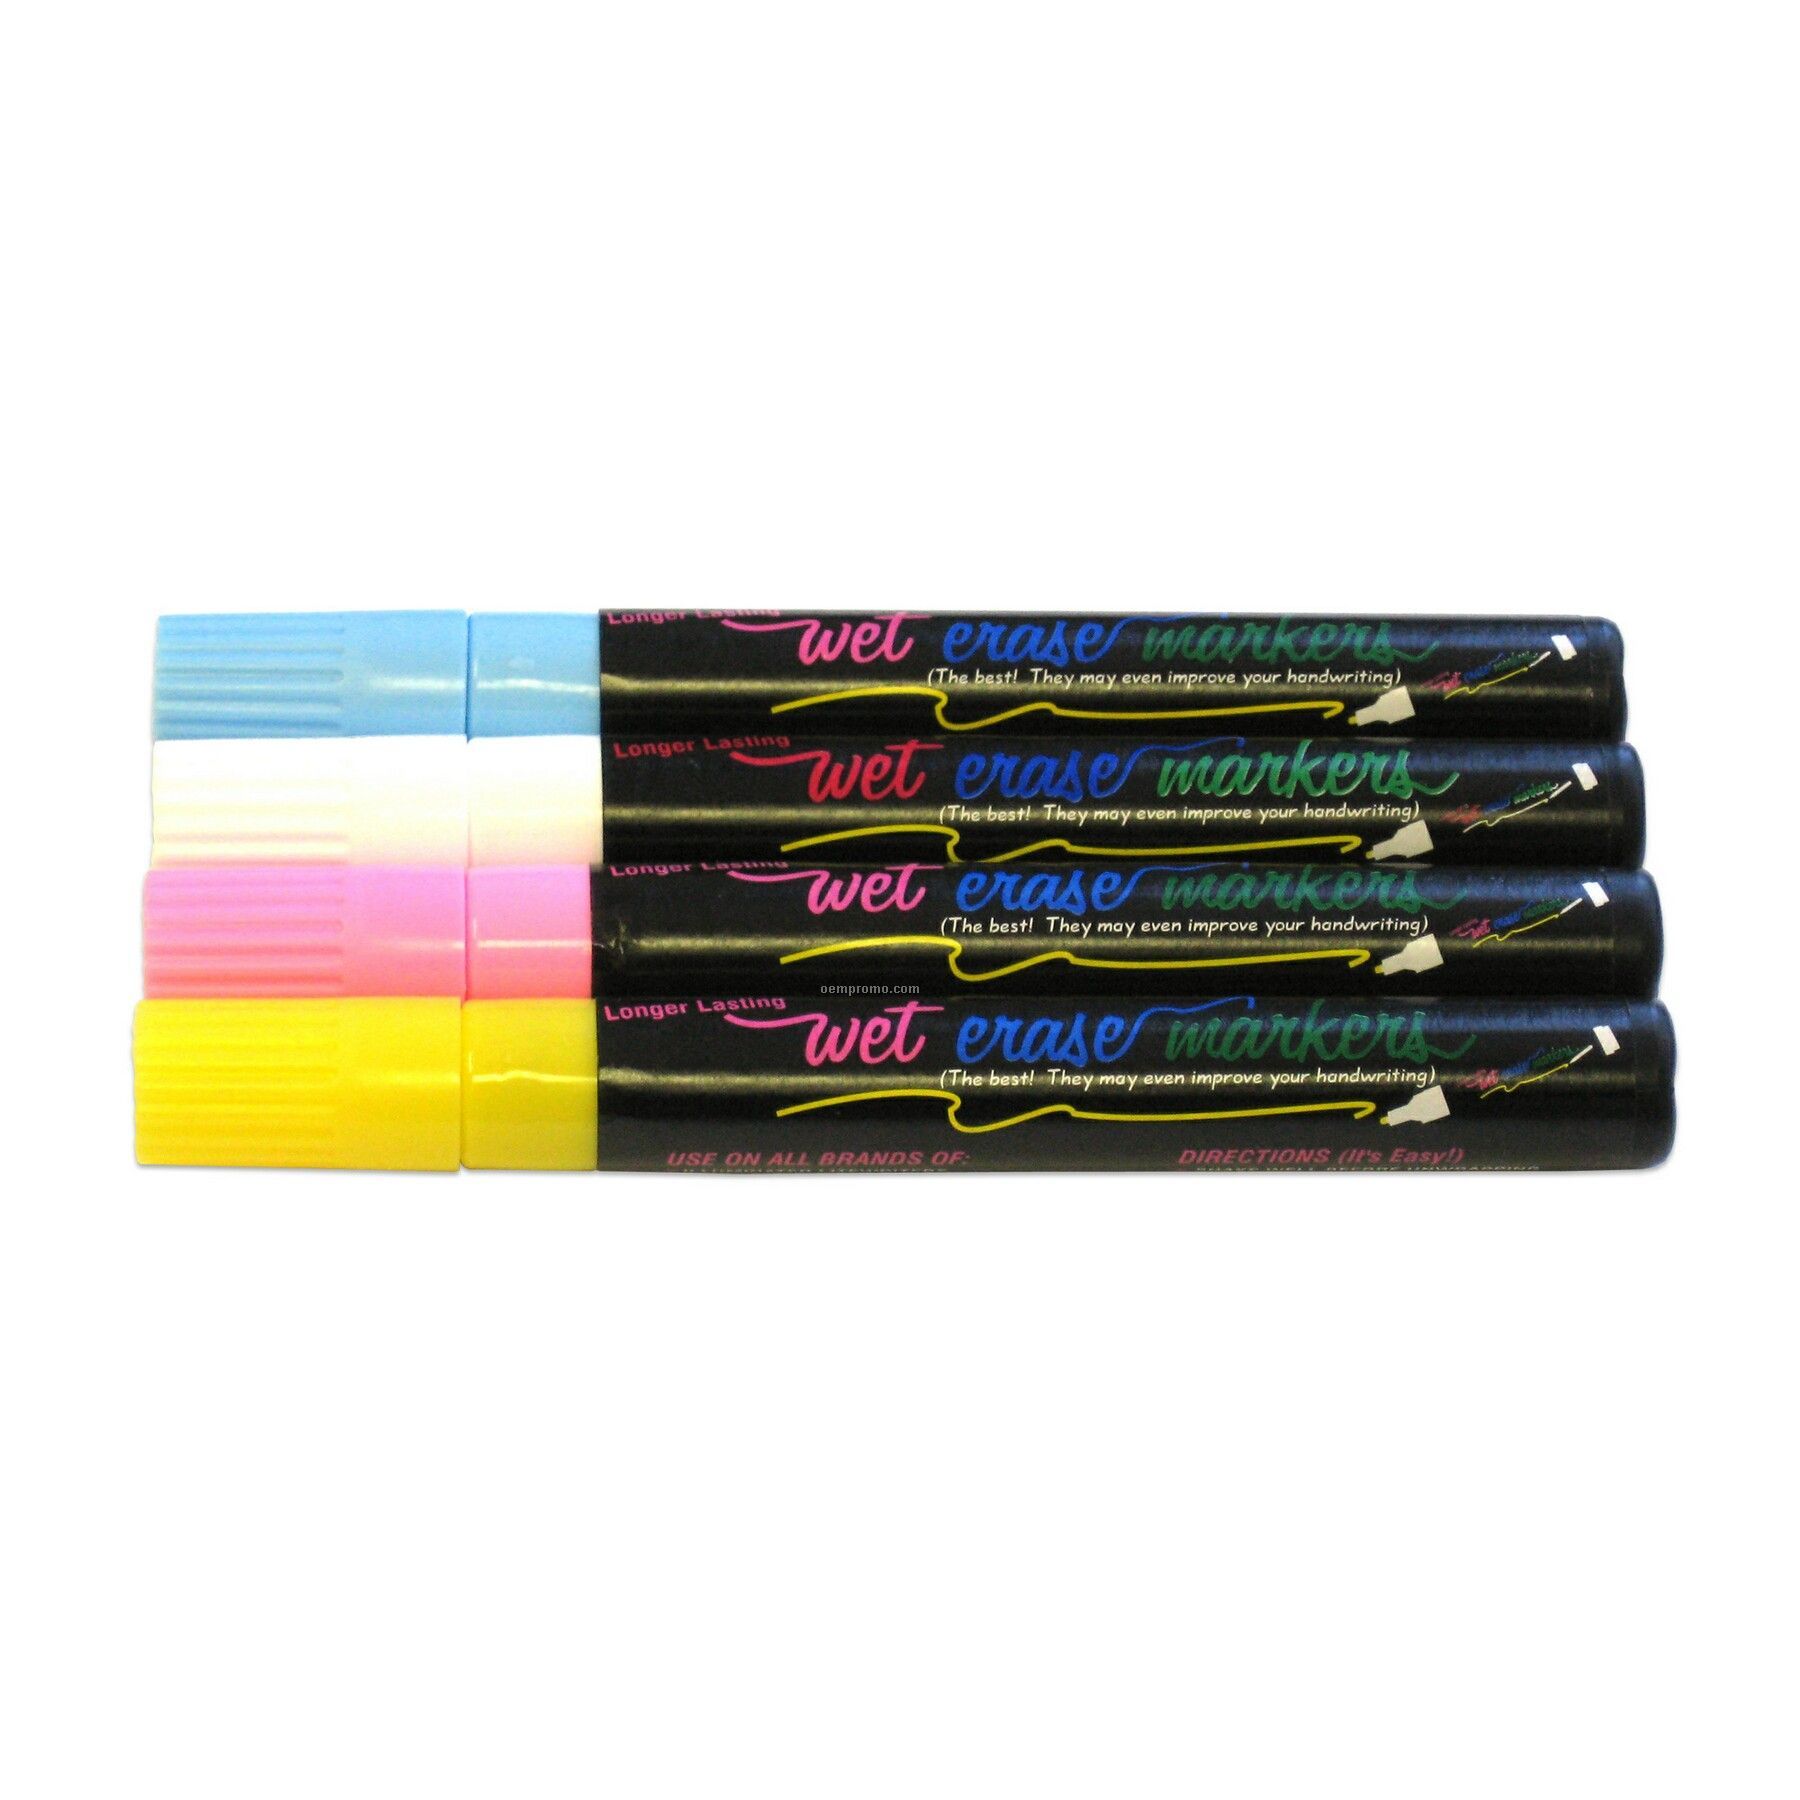 Wet Erase Marker Set - White/ Blue/ Yellow/ Pink (4 Pack)